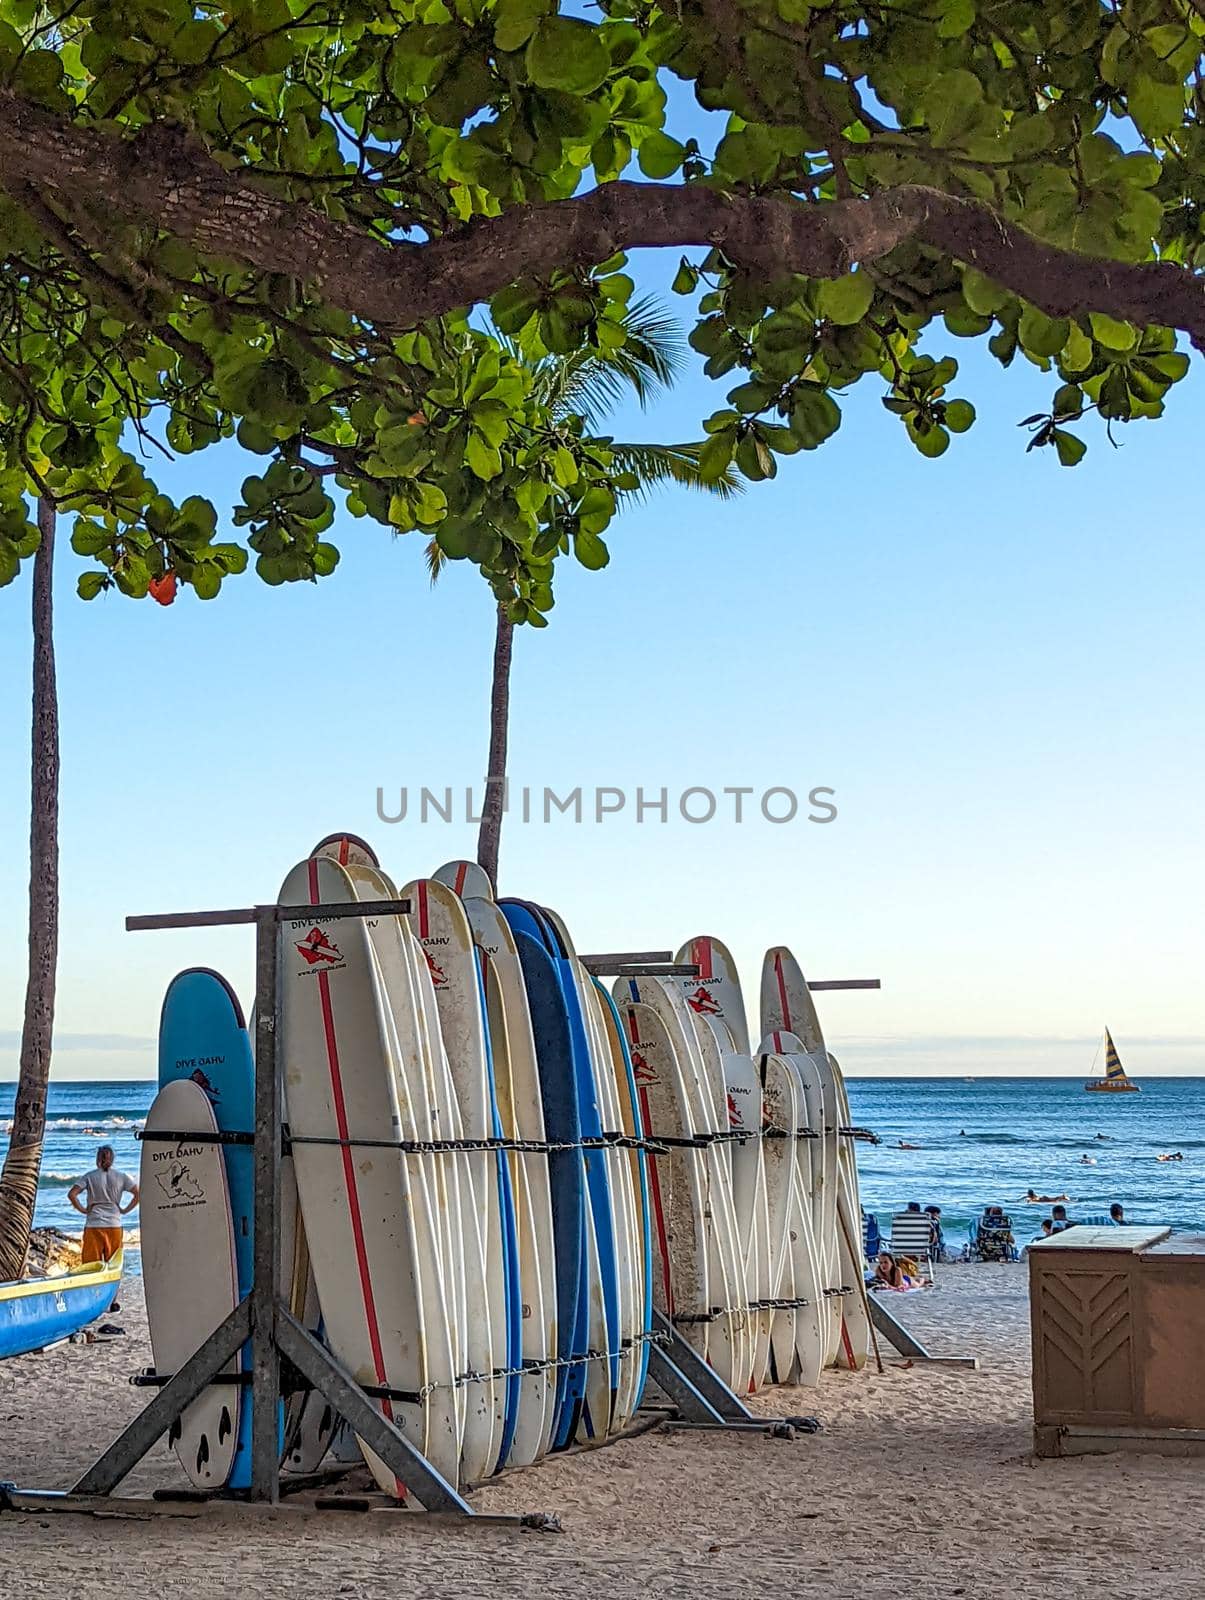 Surf rental shop on Waikiki beach on Hawaii by digidreamgrafix